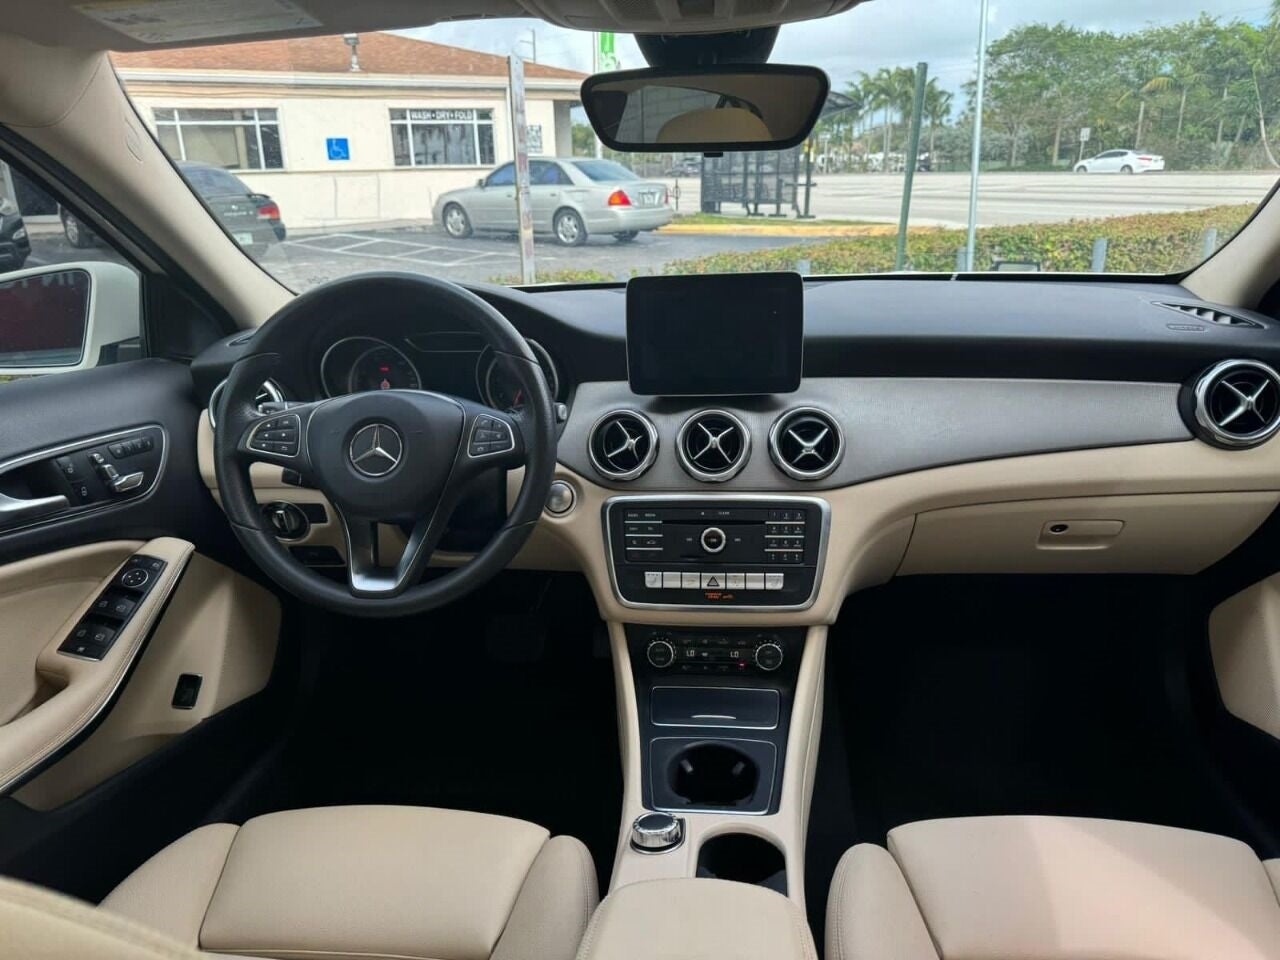 2018 Mercedes-Benz GLA GLA 250 4dr SUV